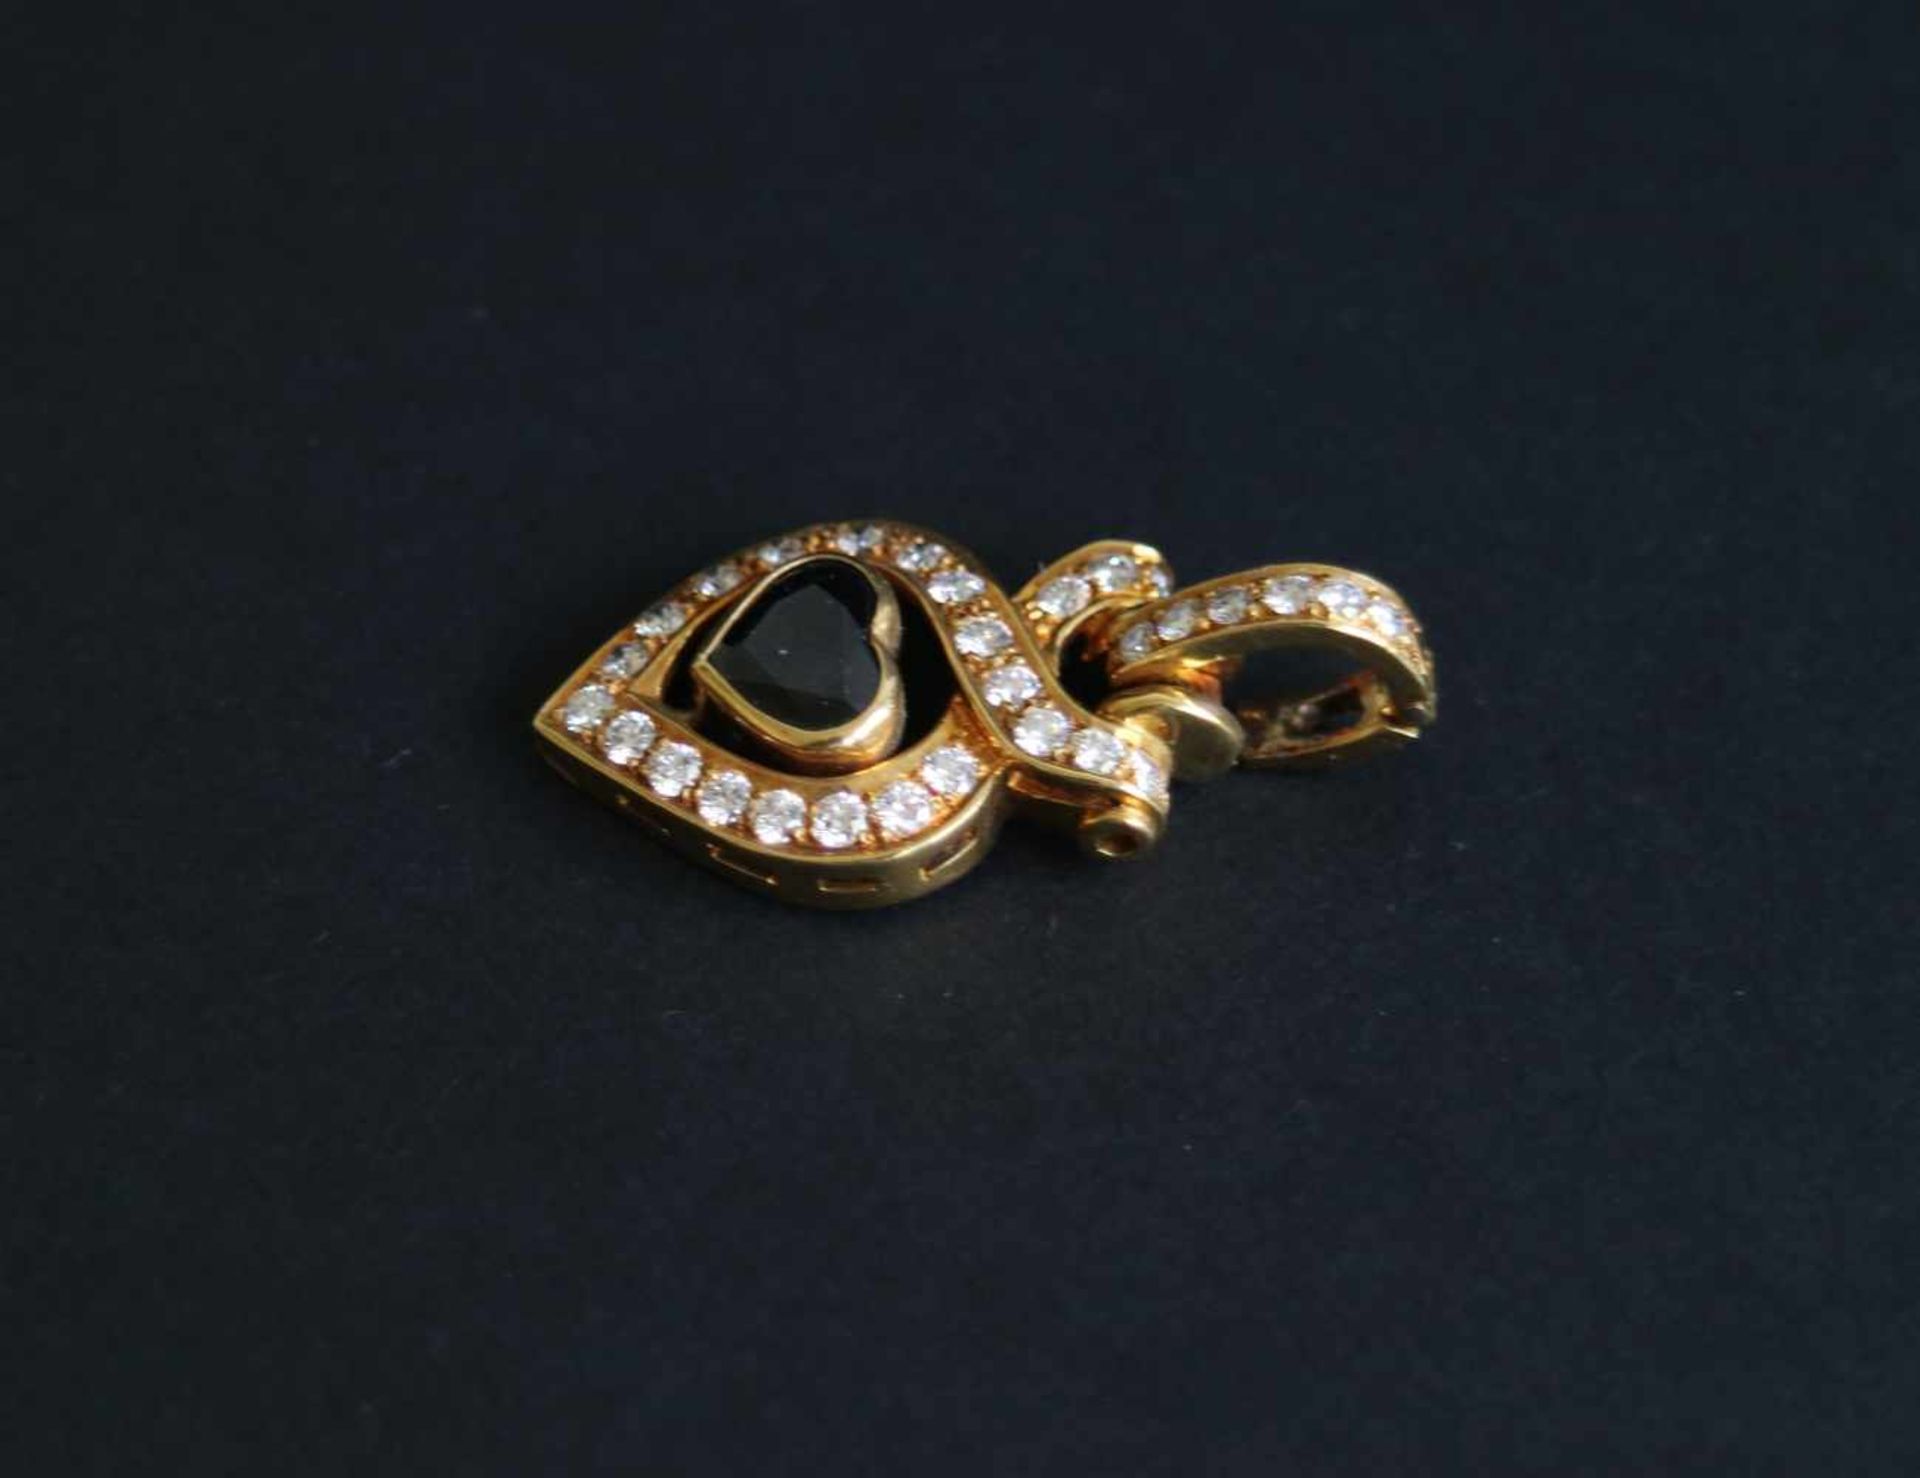 Pendant with blue sapphire 1.1 carat diamond, gold 18 Kt, quality VS / F-G - Image 2 of 2